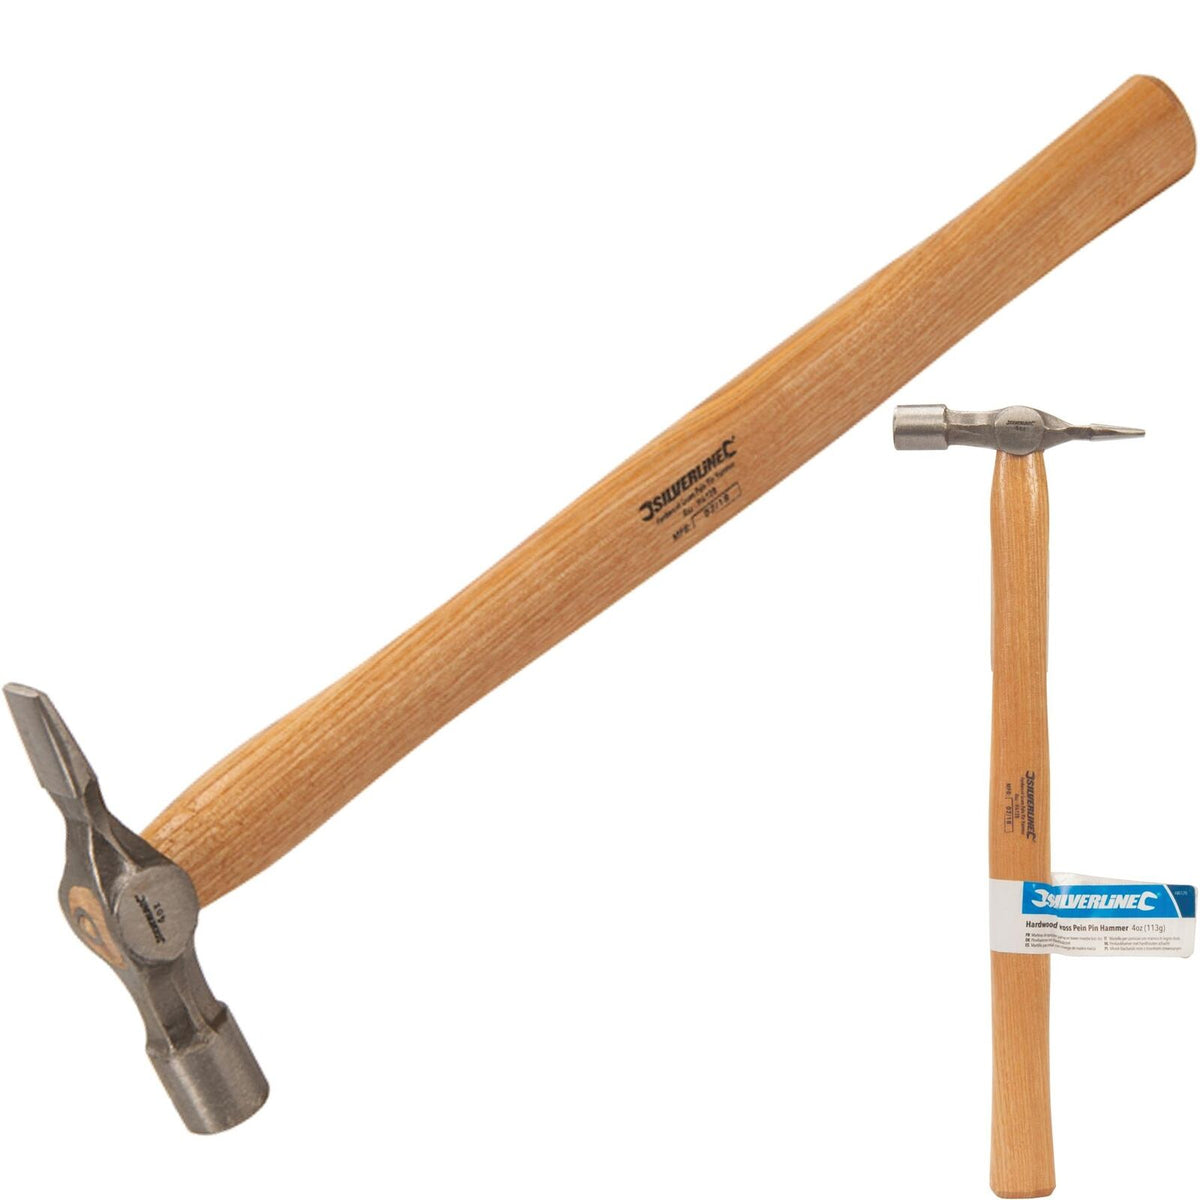 Silverline 4oz Ash Handle Pin Hammer Cross Pein Tack Small Lightweight